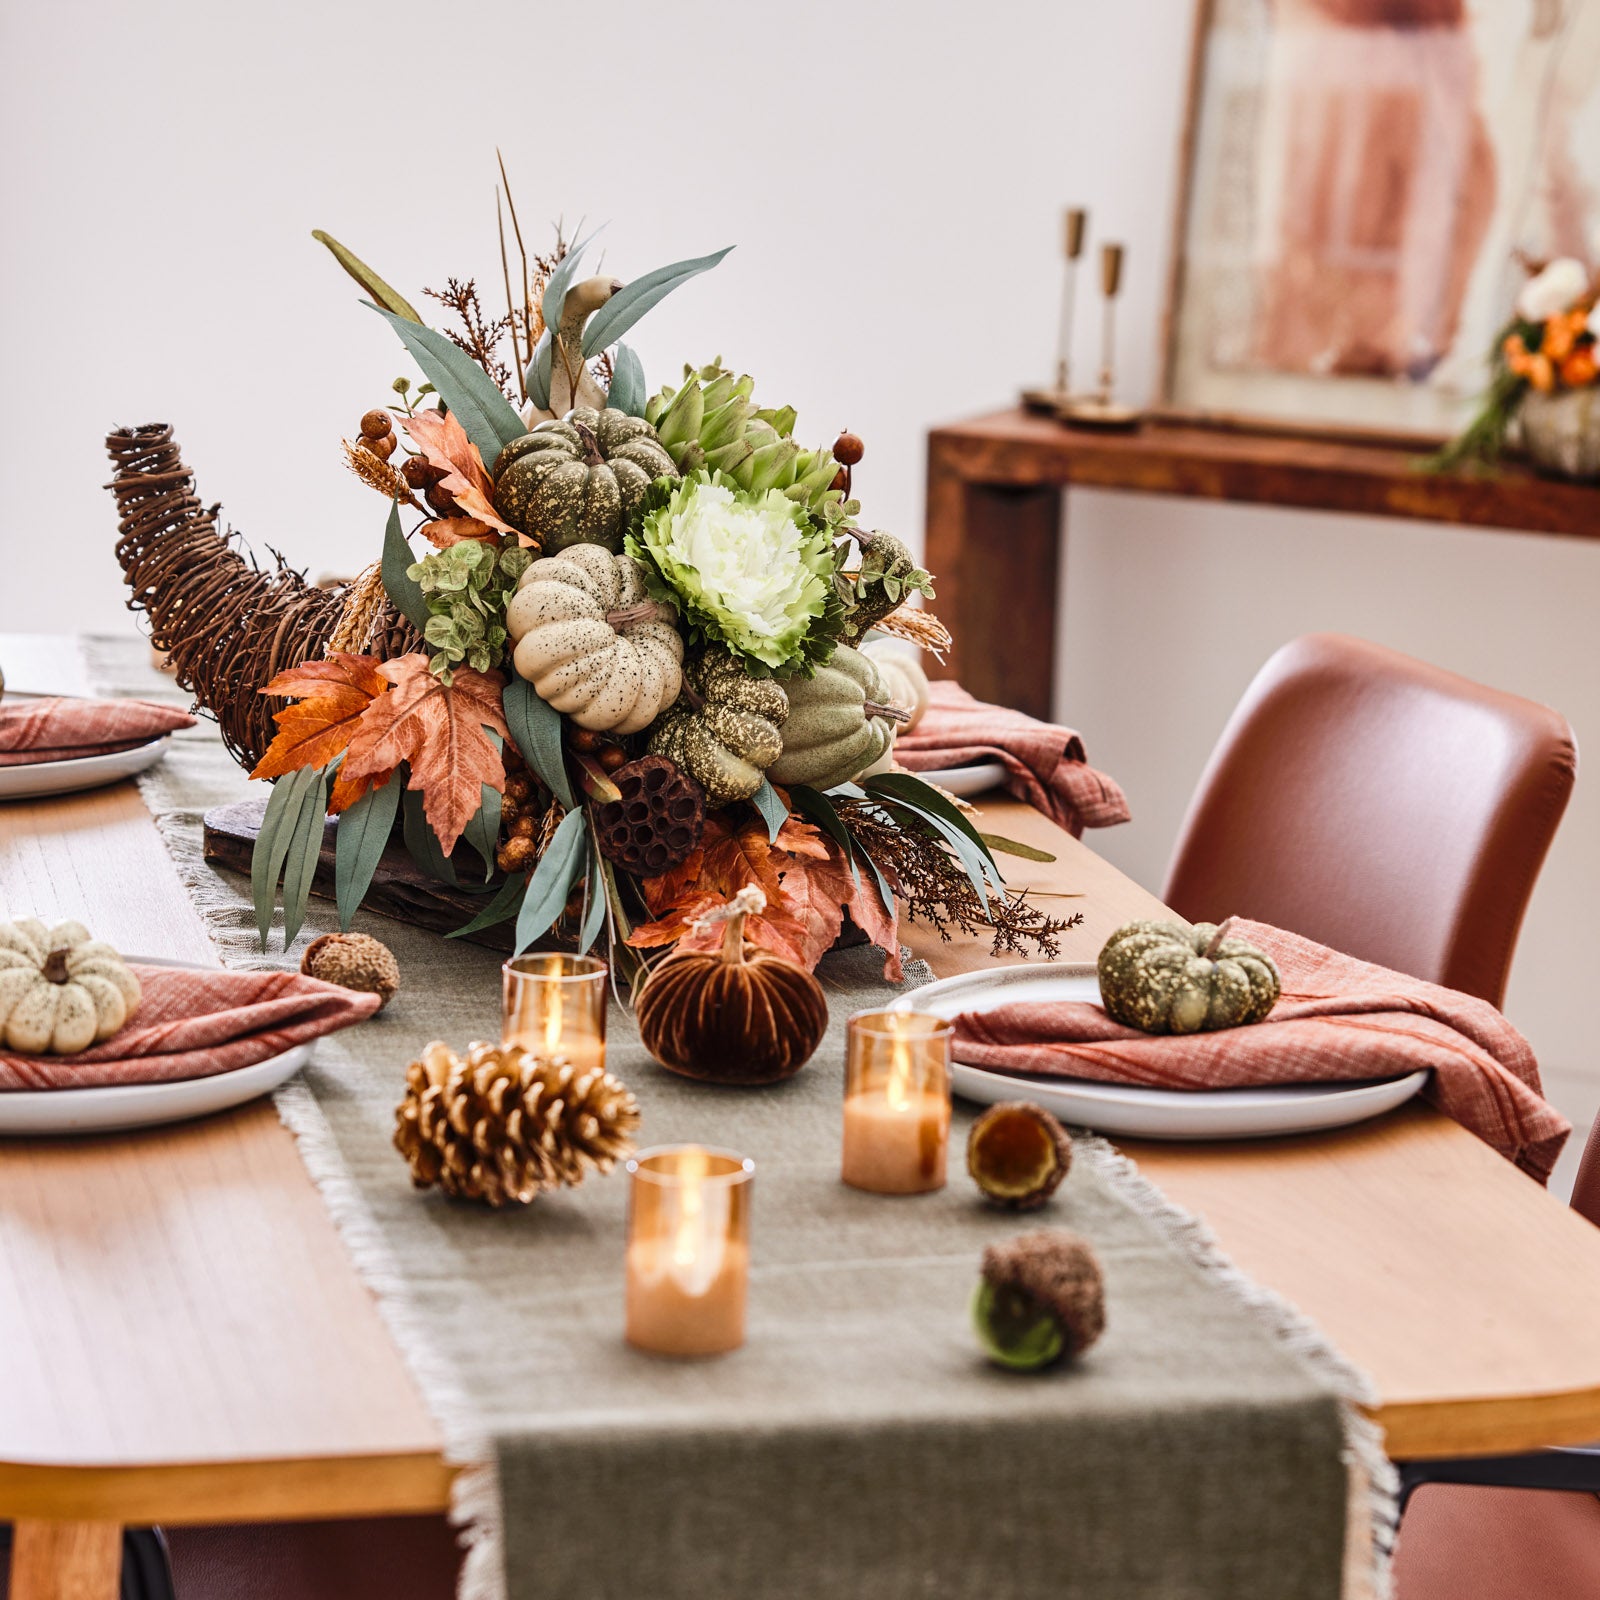 Fall's Grandeur Thanksgiving Cornucopia Centerpiece with Pumpkins